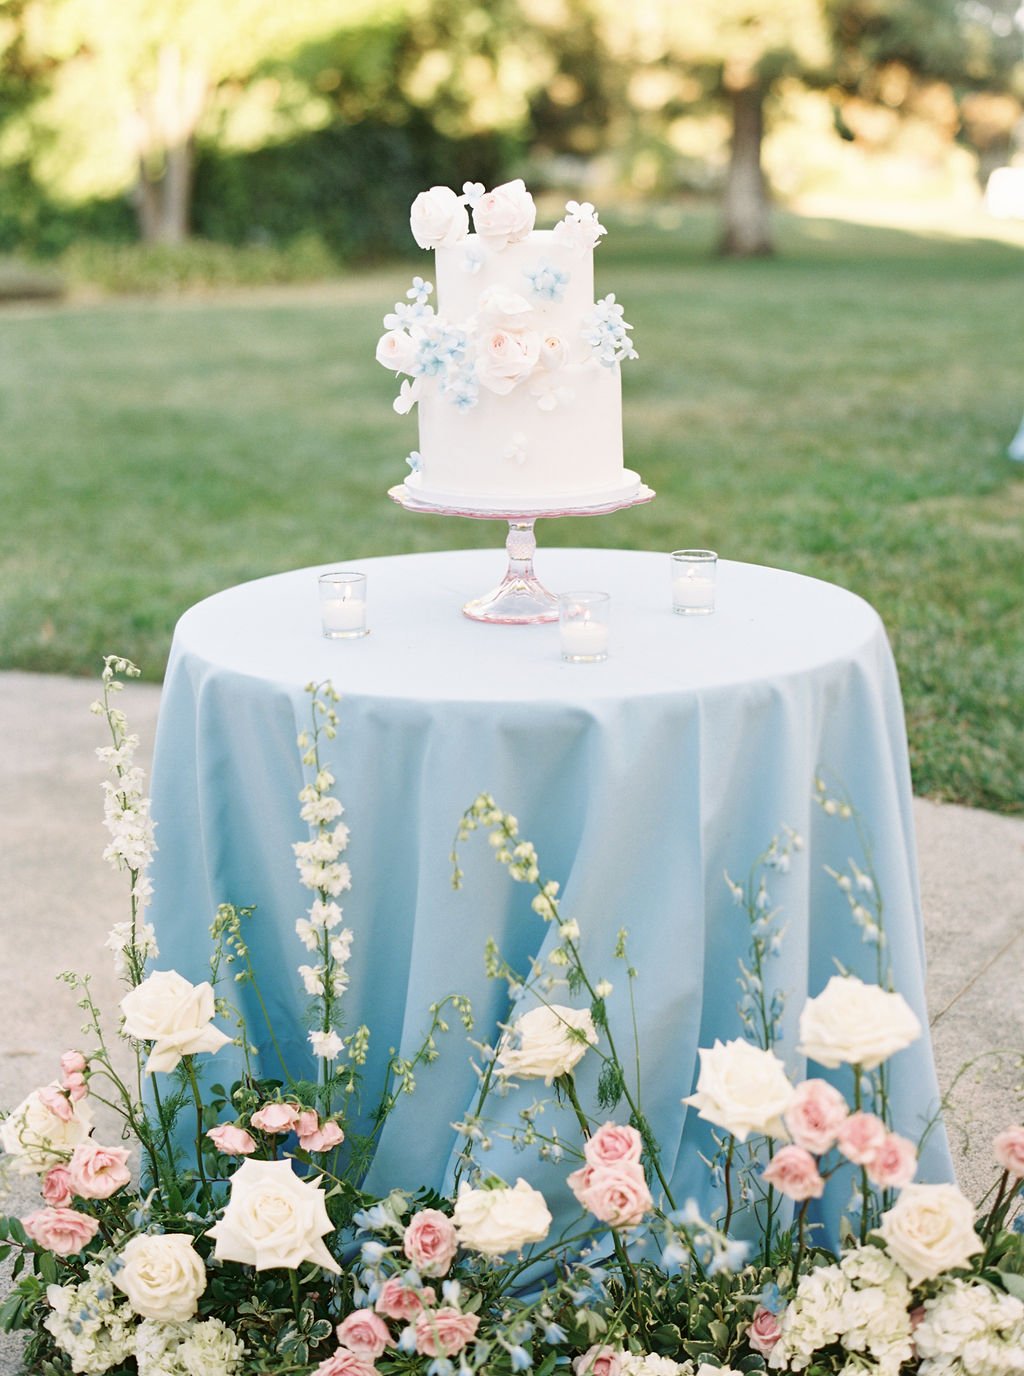  Wedding cake at French Garden Inspired Park Winters Wedding 